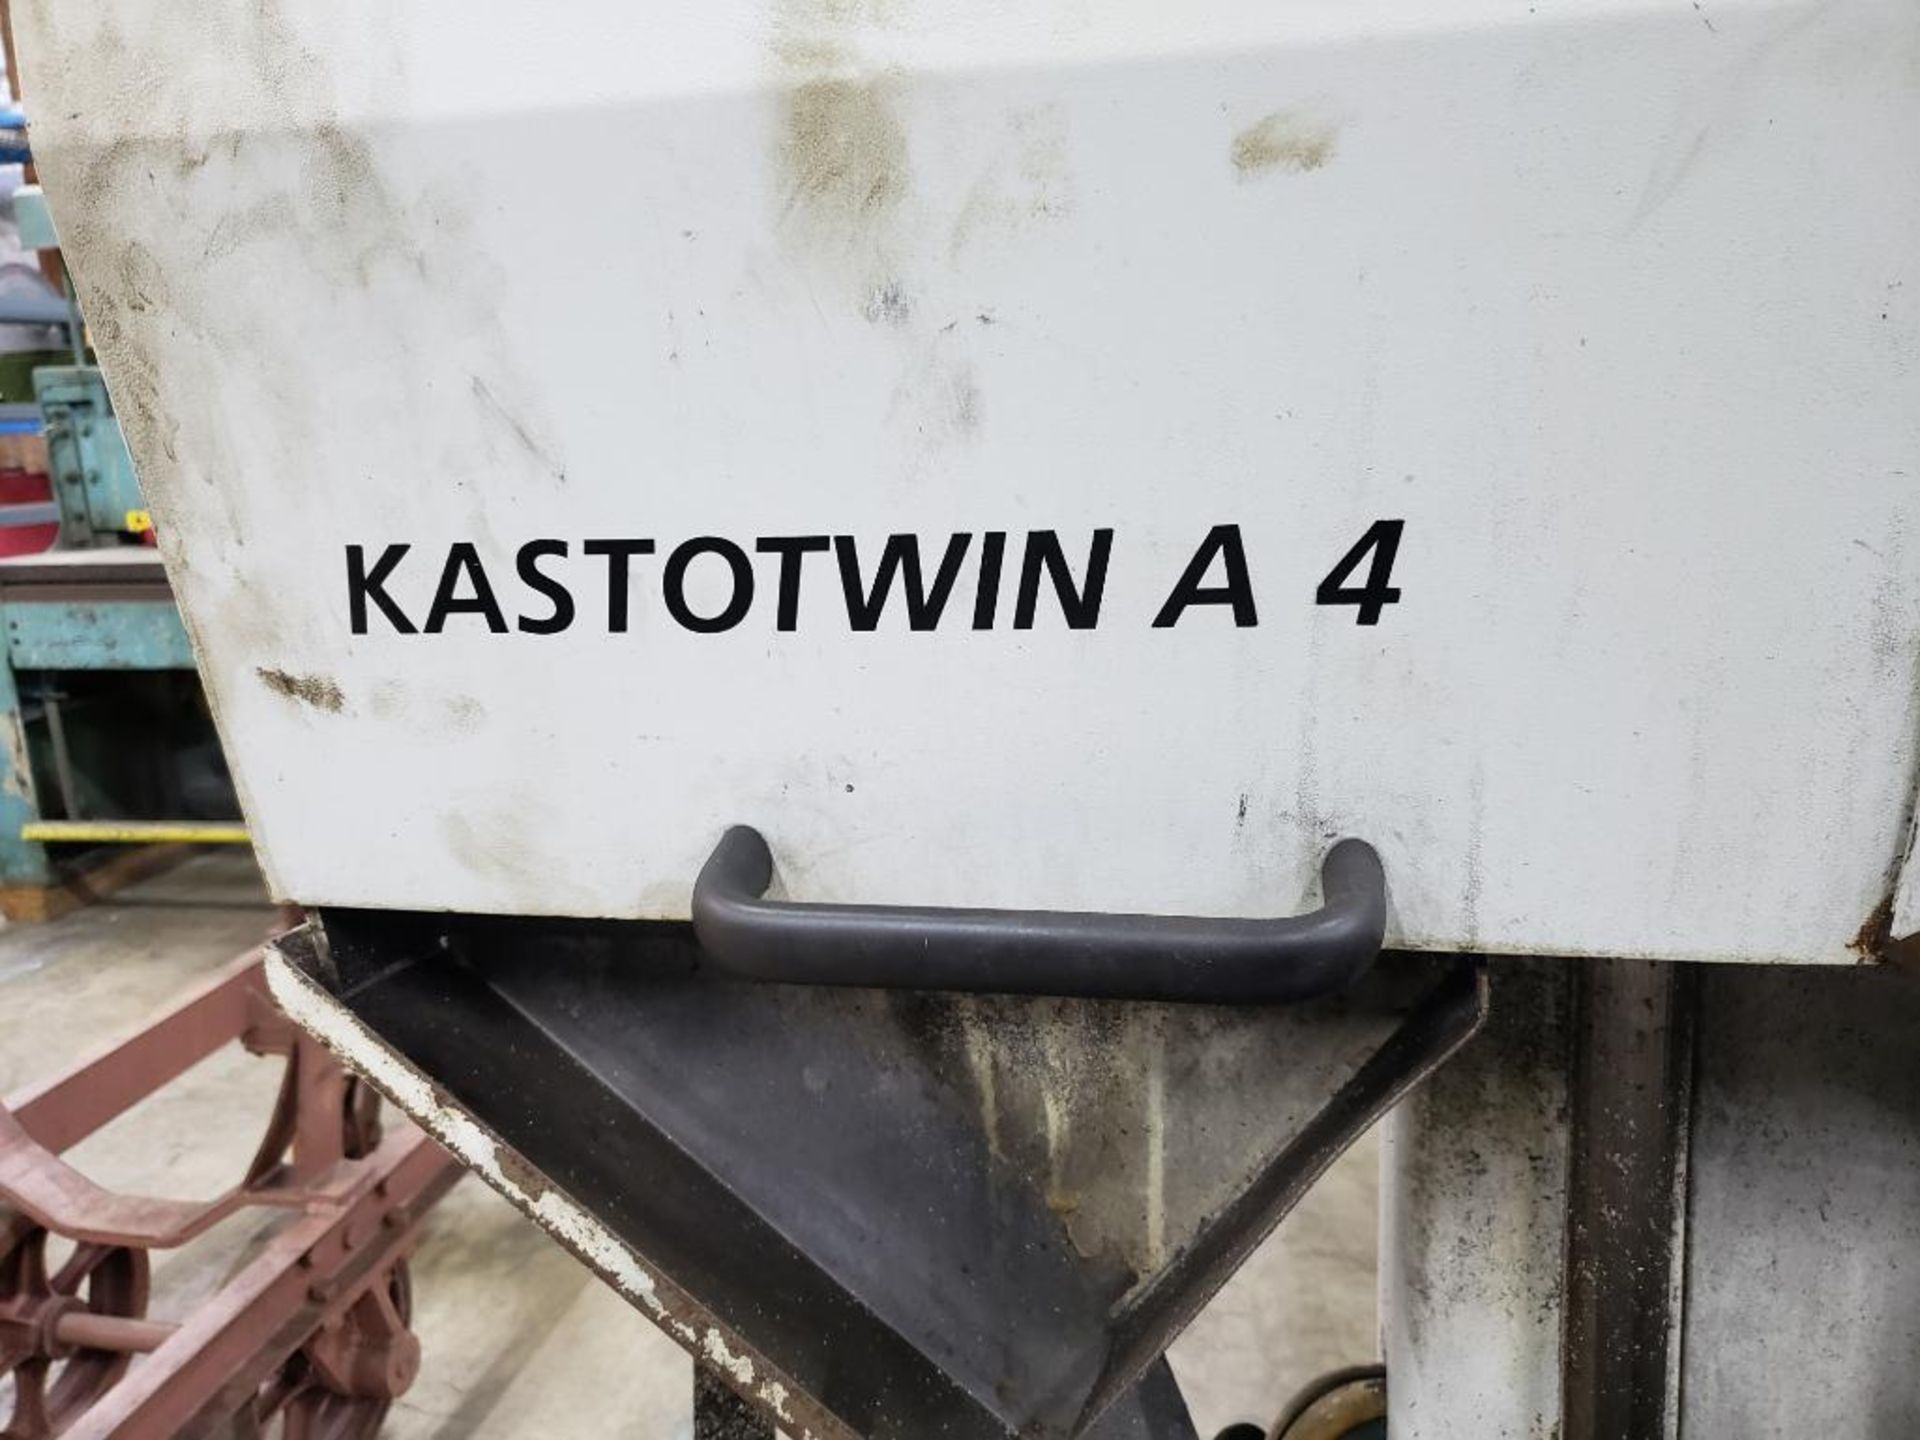 Kasto horizontal CNC band saw Model Kastotwin A4, 3 phase 440v, Mfg year 2000. Serial # 6428102047. - Bild 3 aus 32